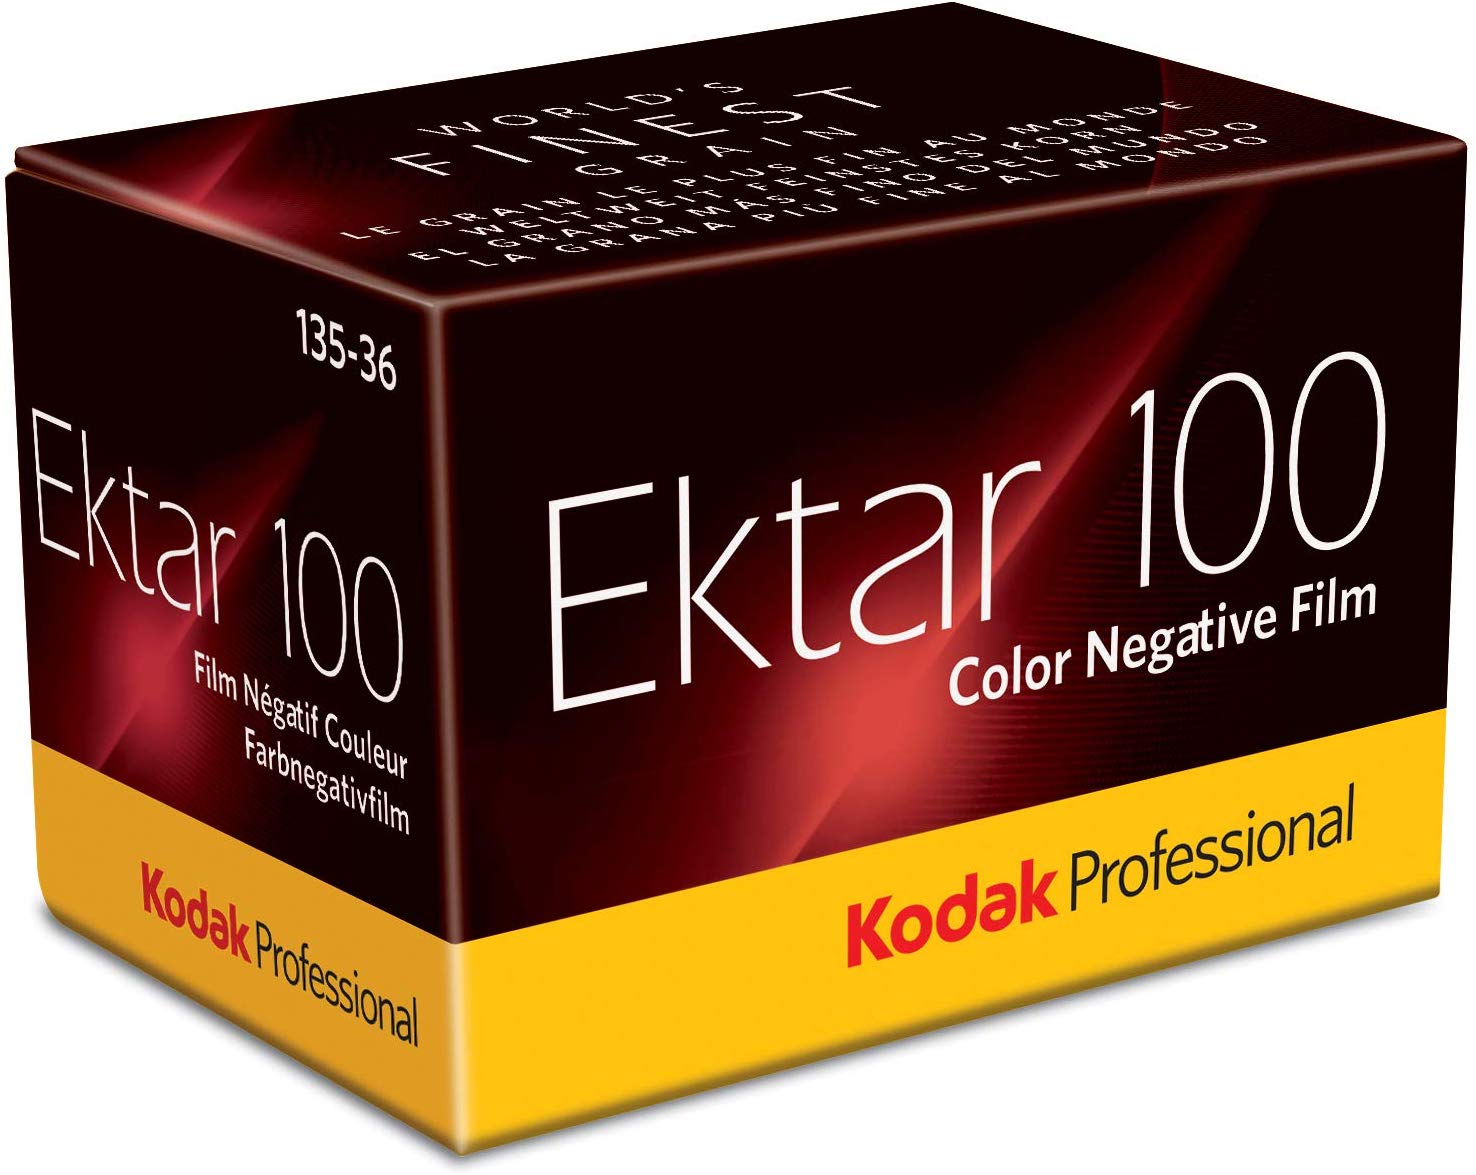 Kodak Ektar 100 Professional Film